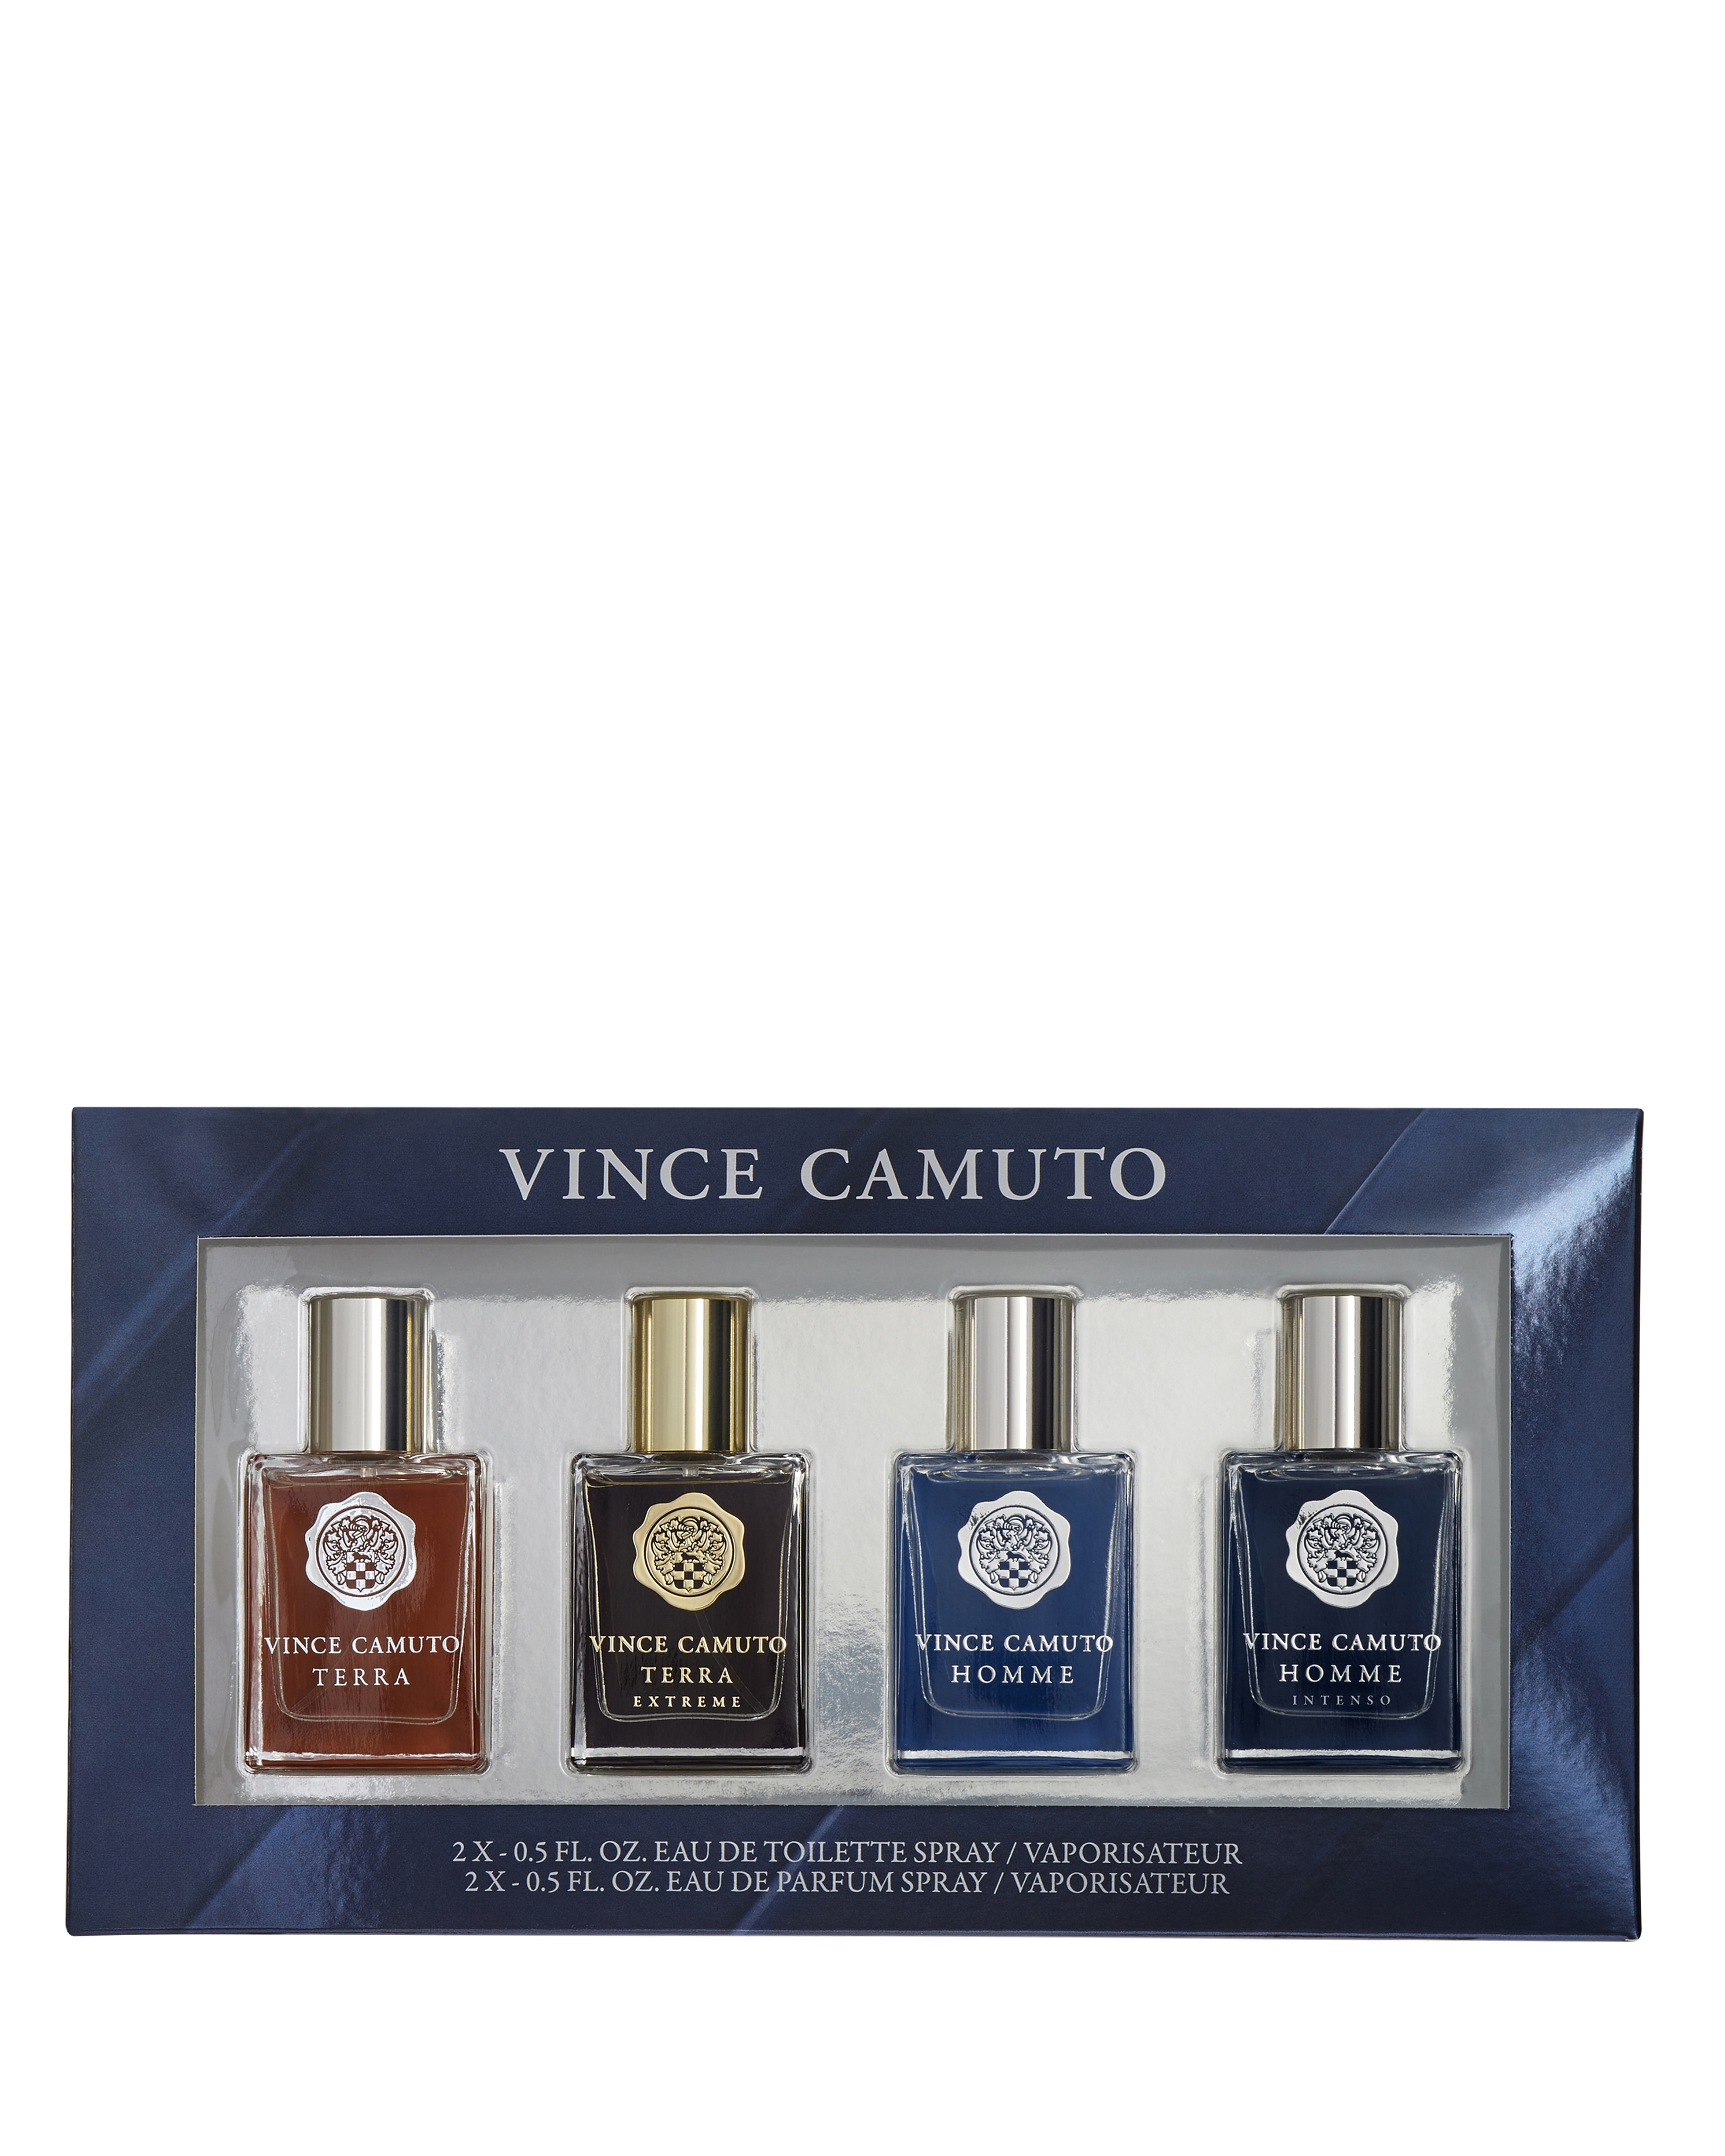 Men's Vince Camuto Fragrance: Terra & Eterno